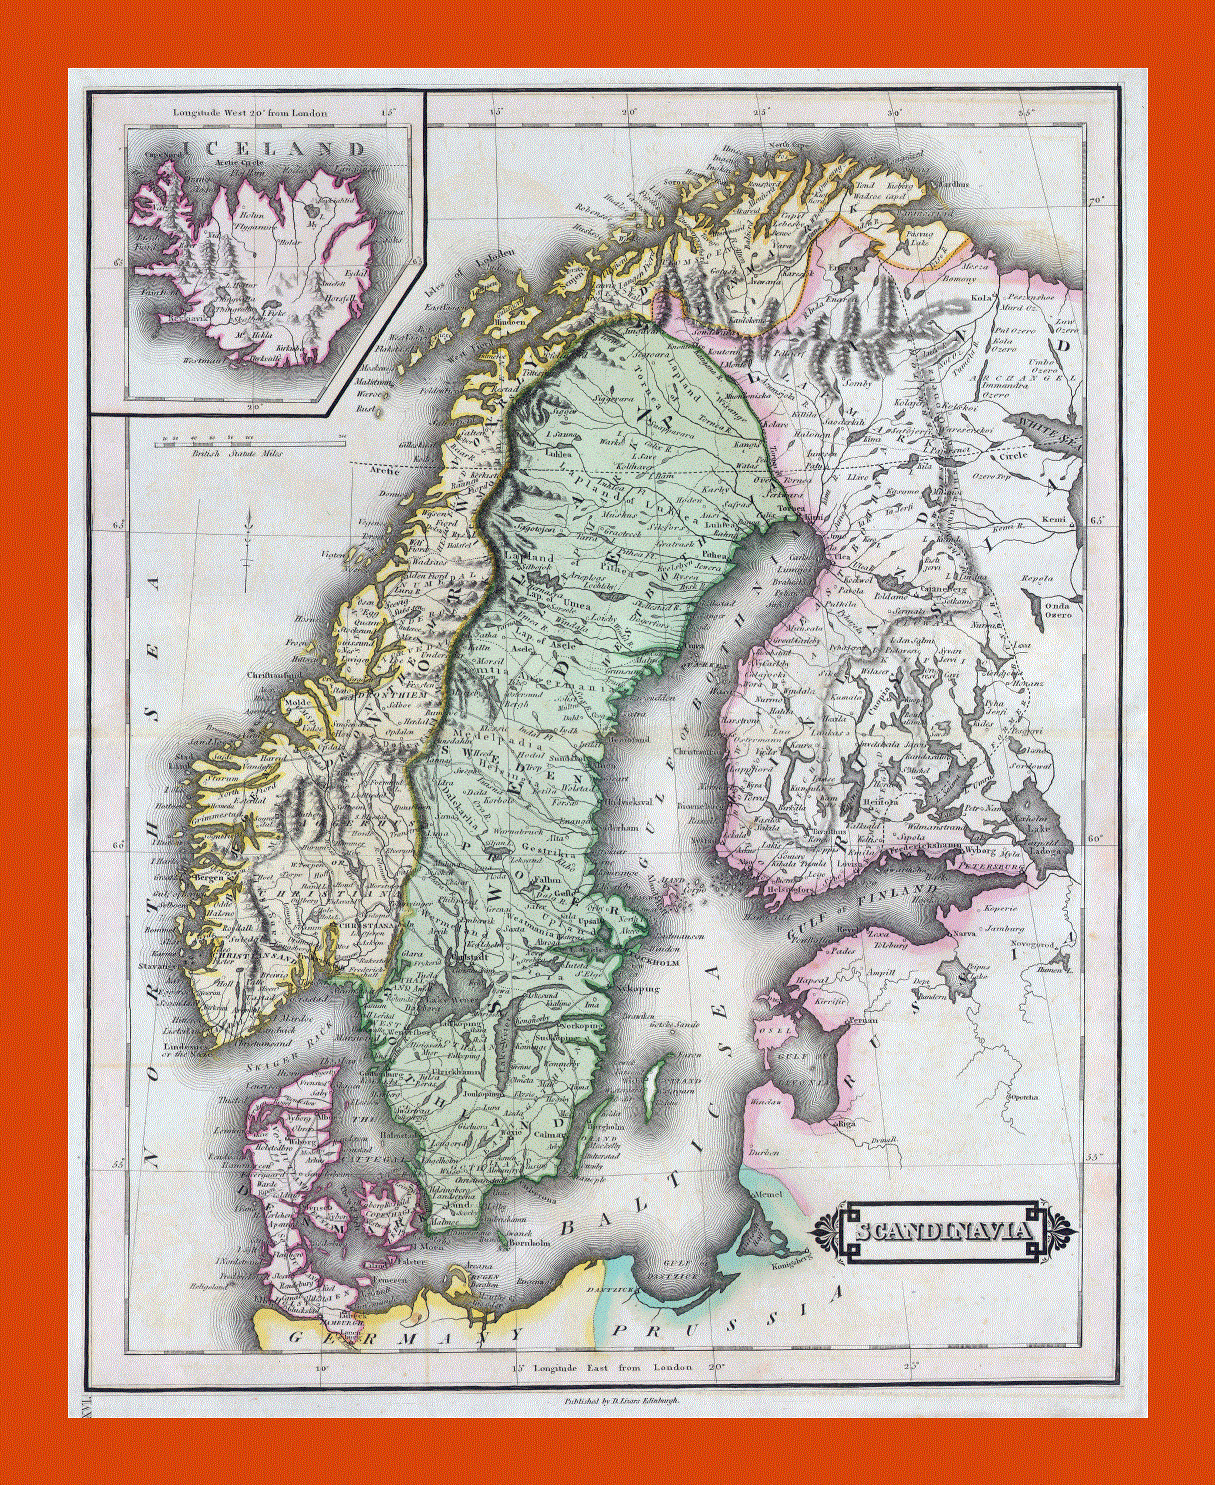 Old map of Scandinavia - 1840